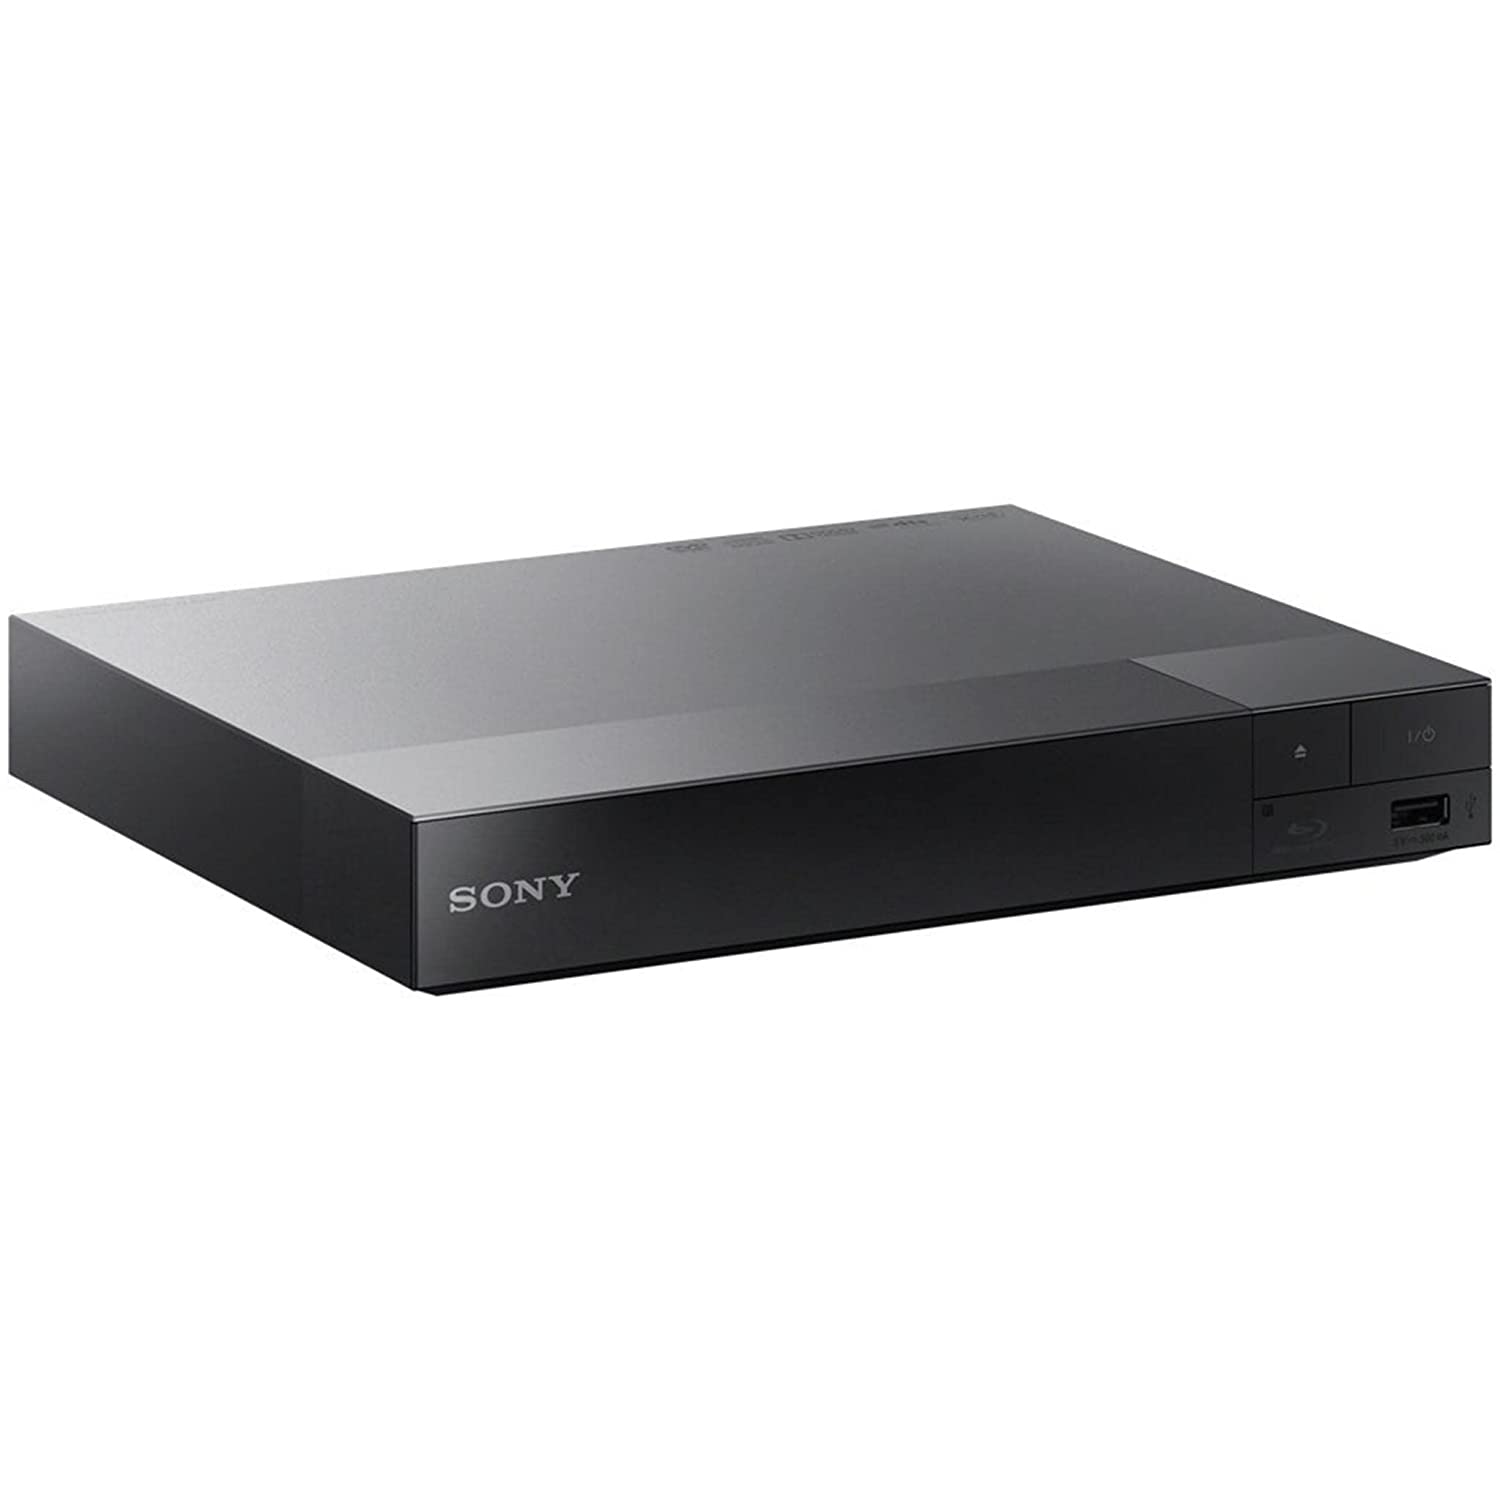 SONY S1700 DVD Player